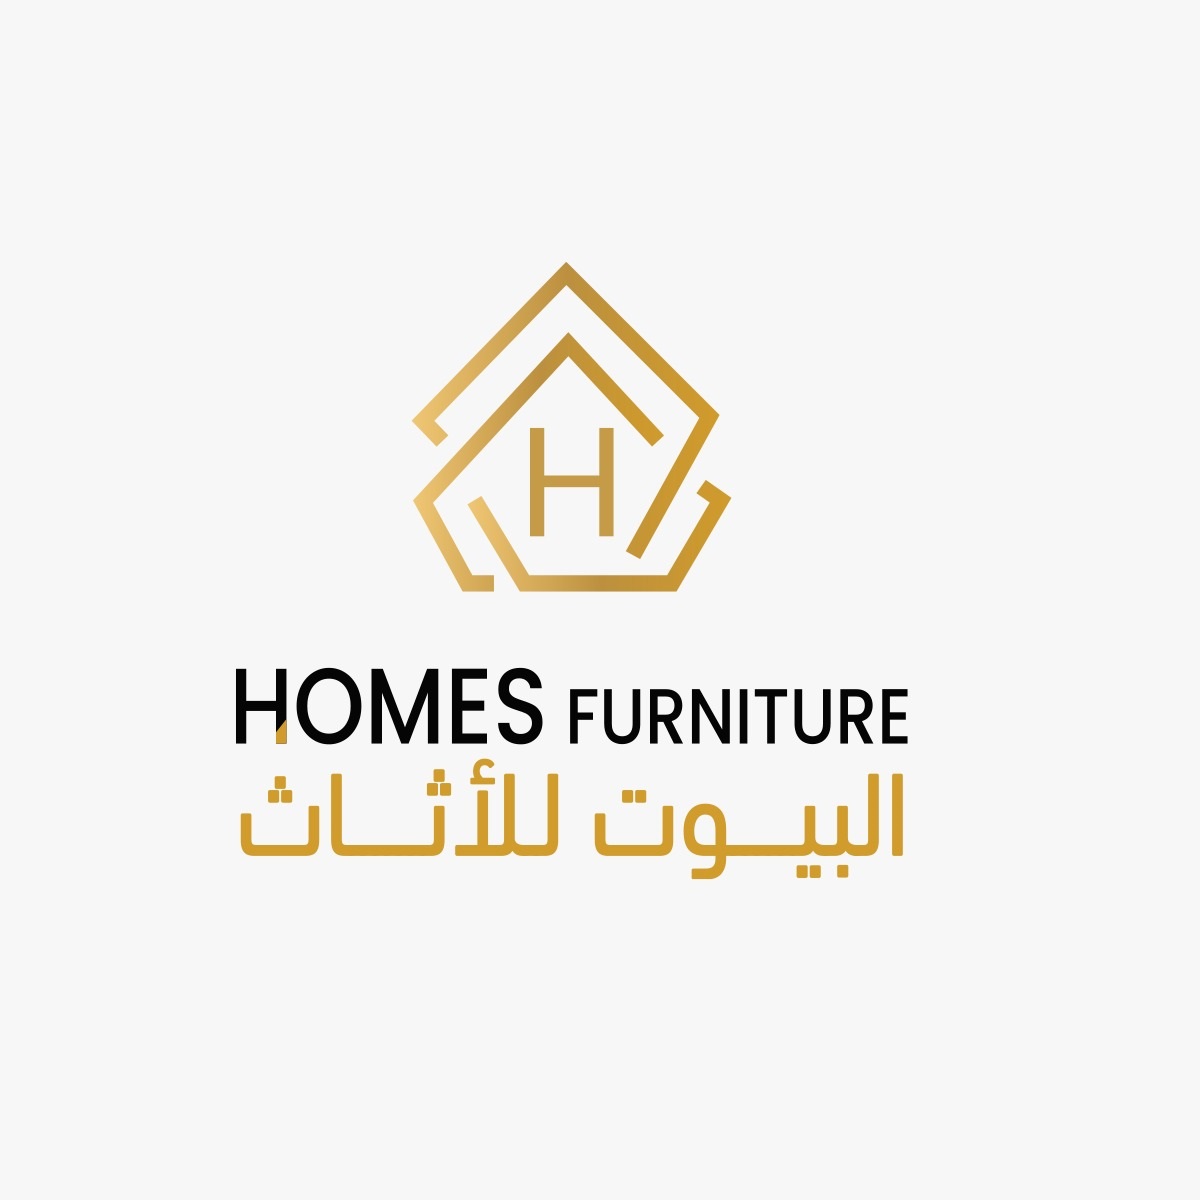 Homes Furniture Co